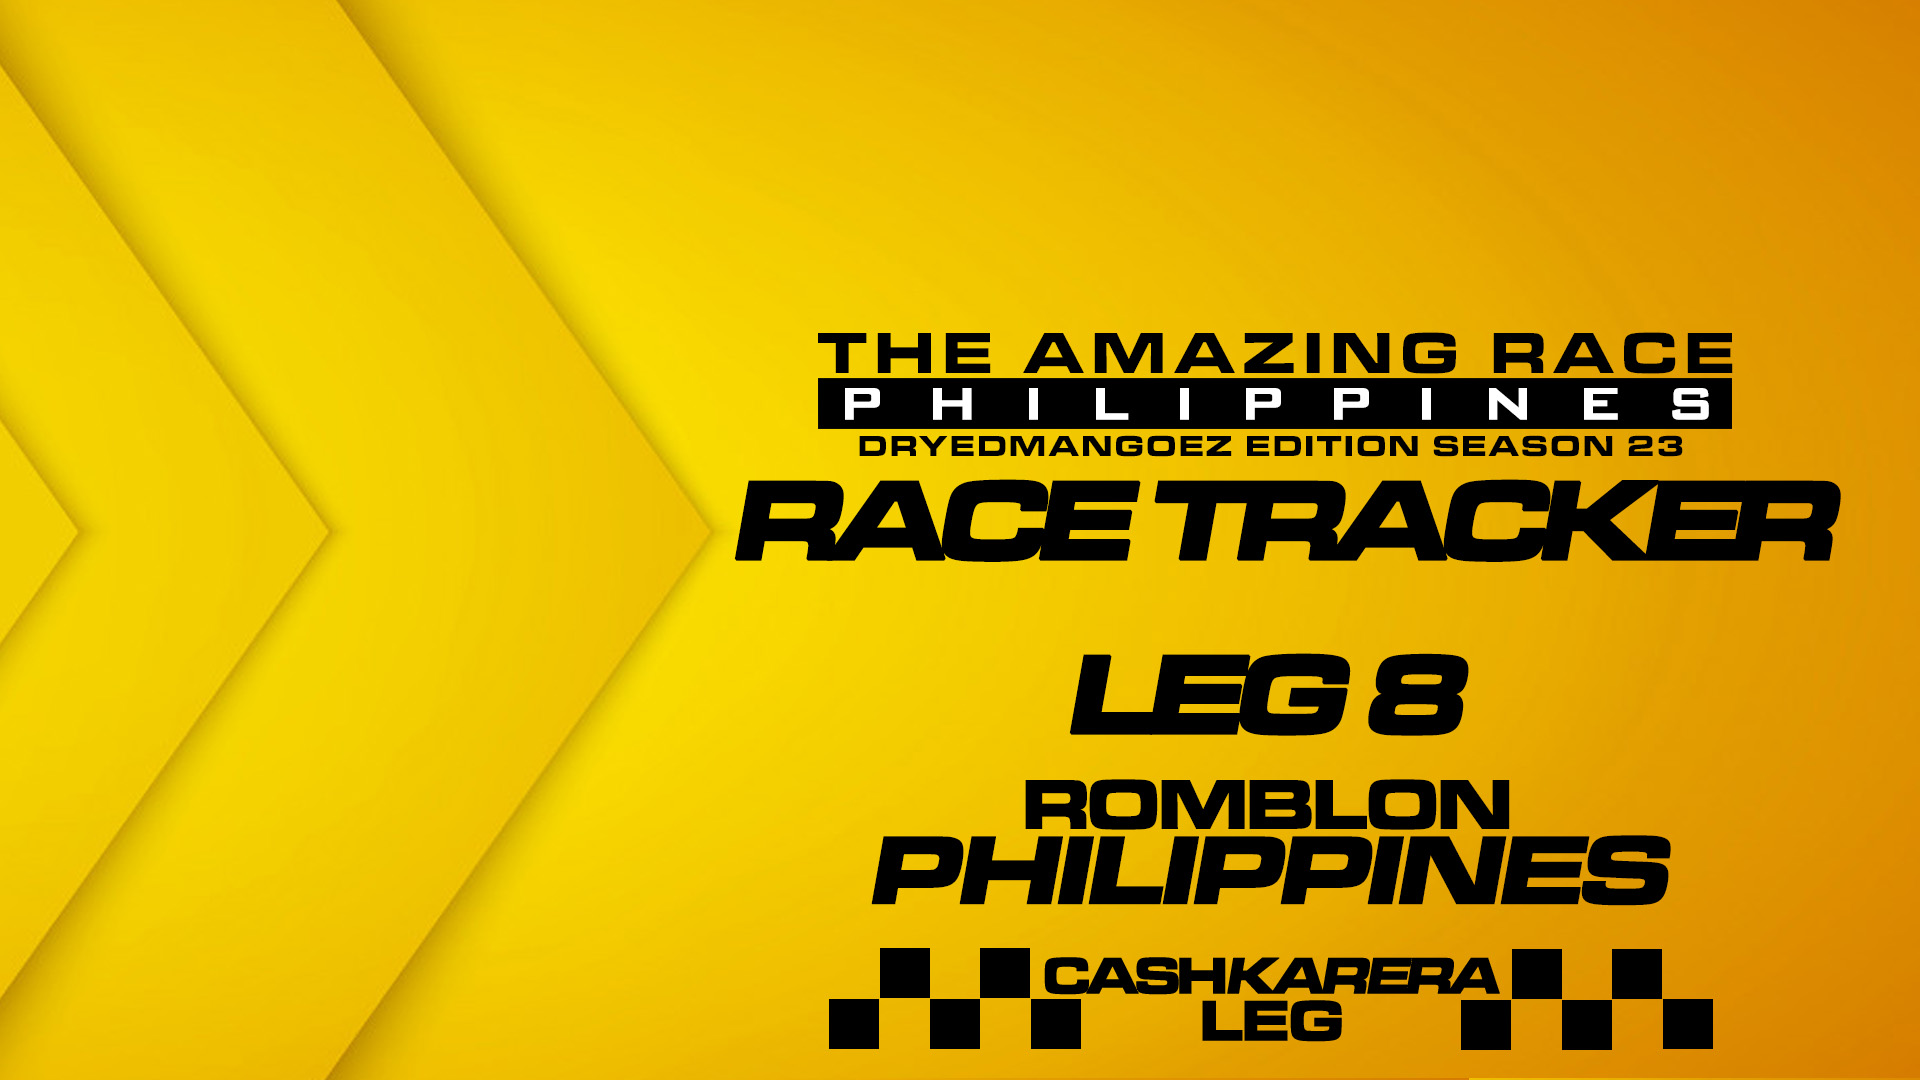 The Amazing Race Philippines: DryedMangoez Edition Season 23 Race Tracker – Leg 8